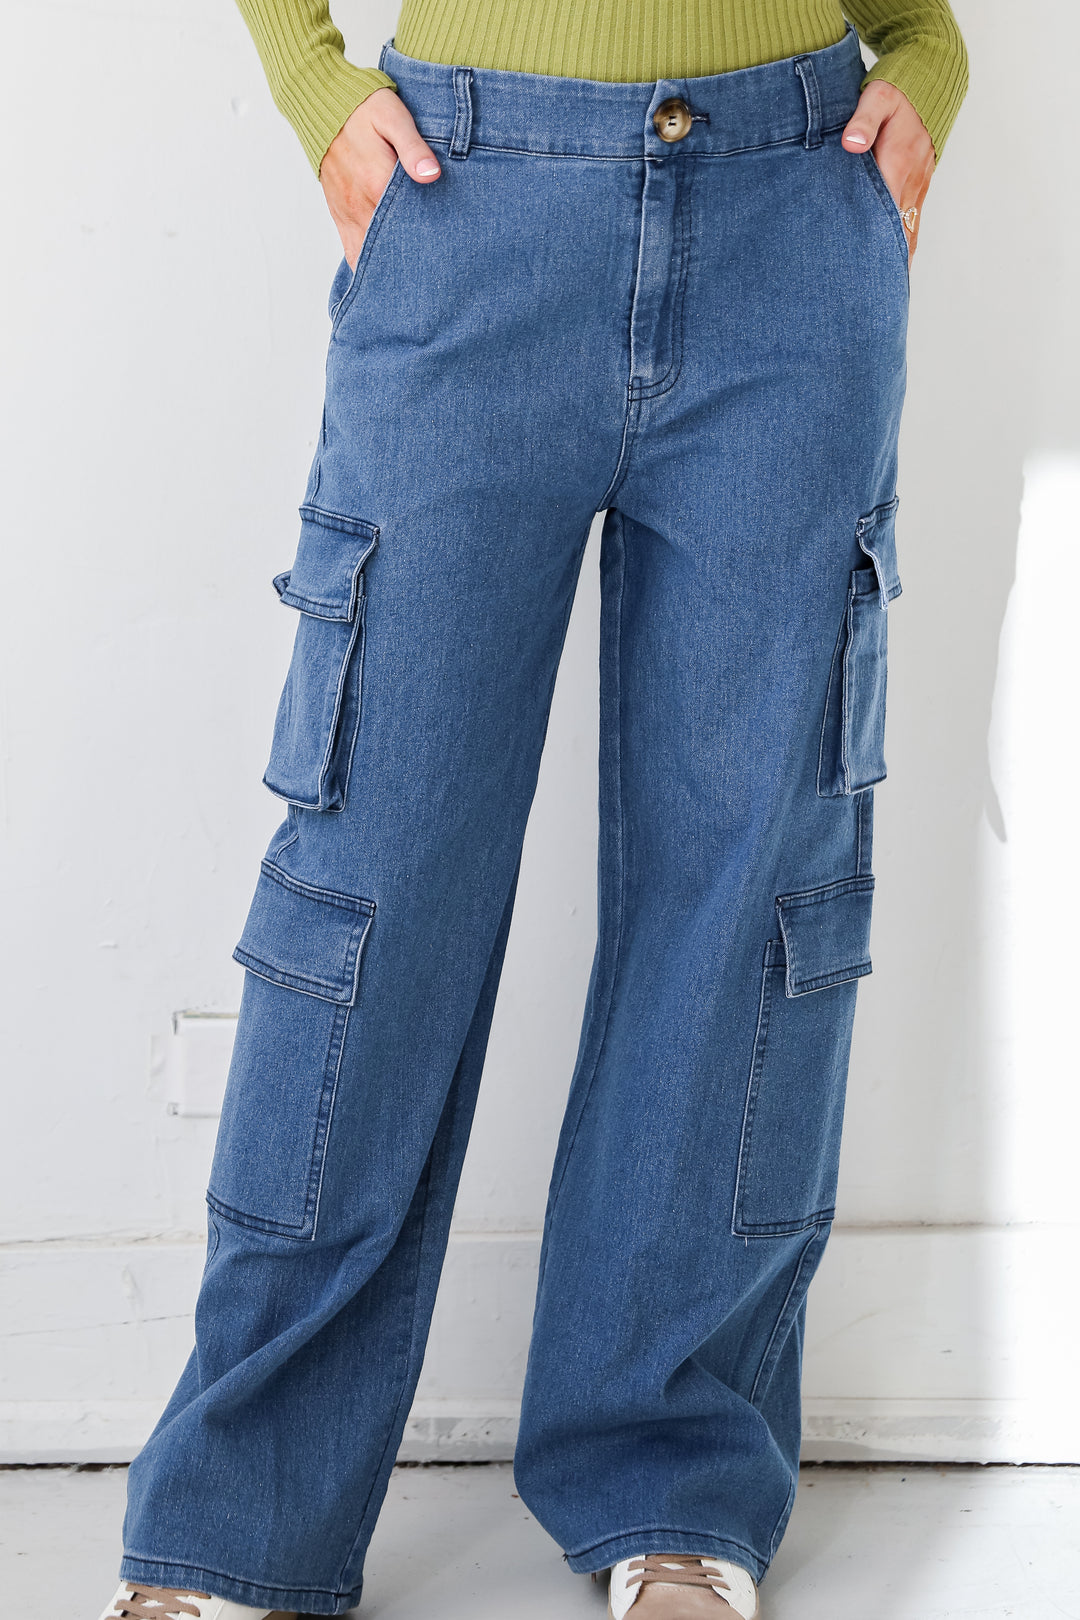 cargo jeans for women